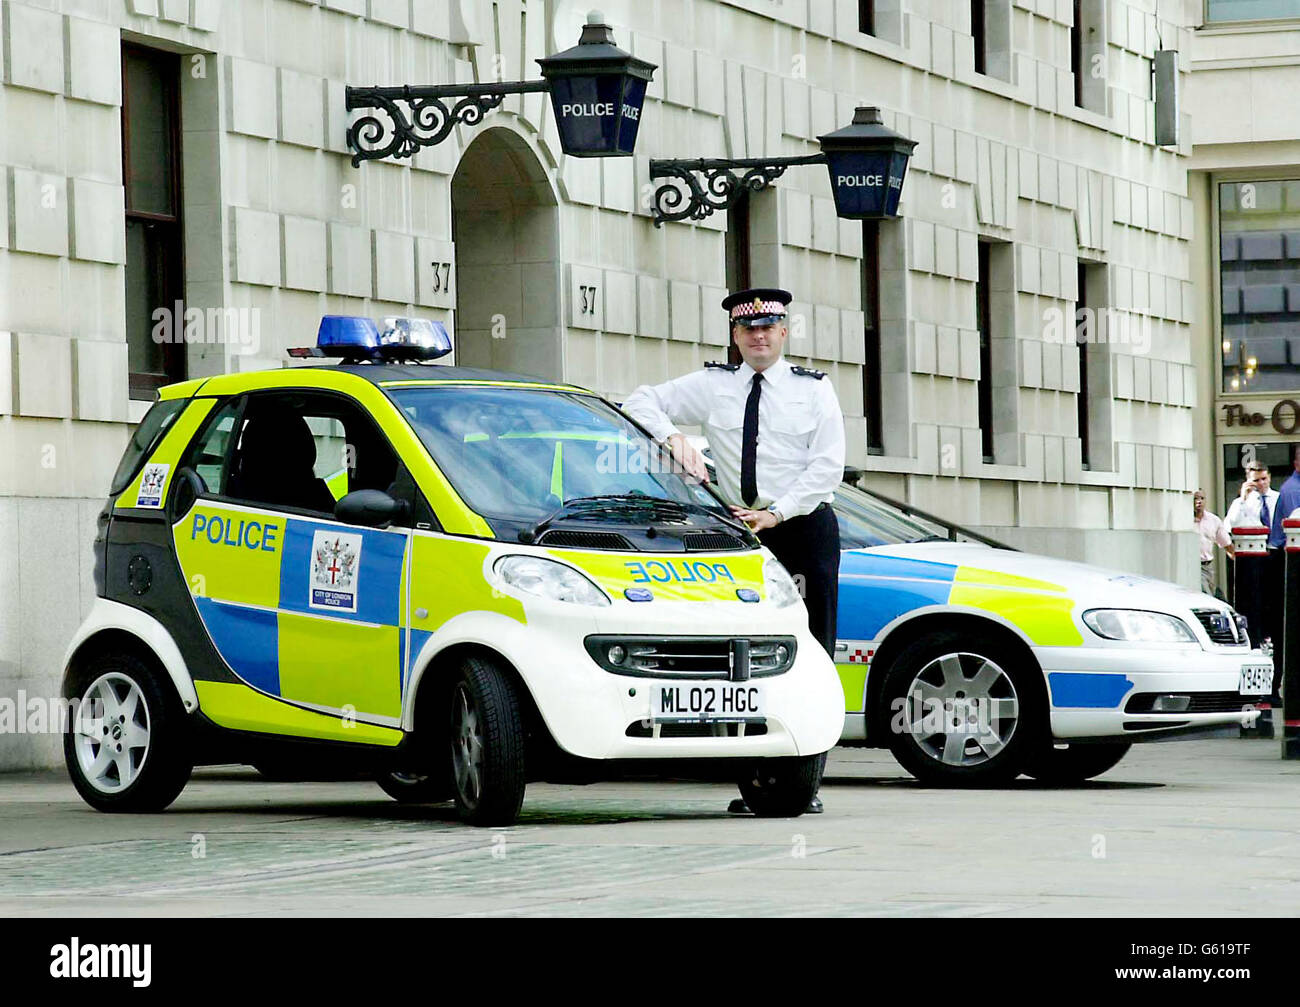 Police use Smart Car Stock Photo - Alamy